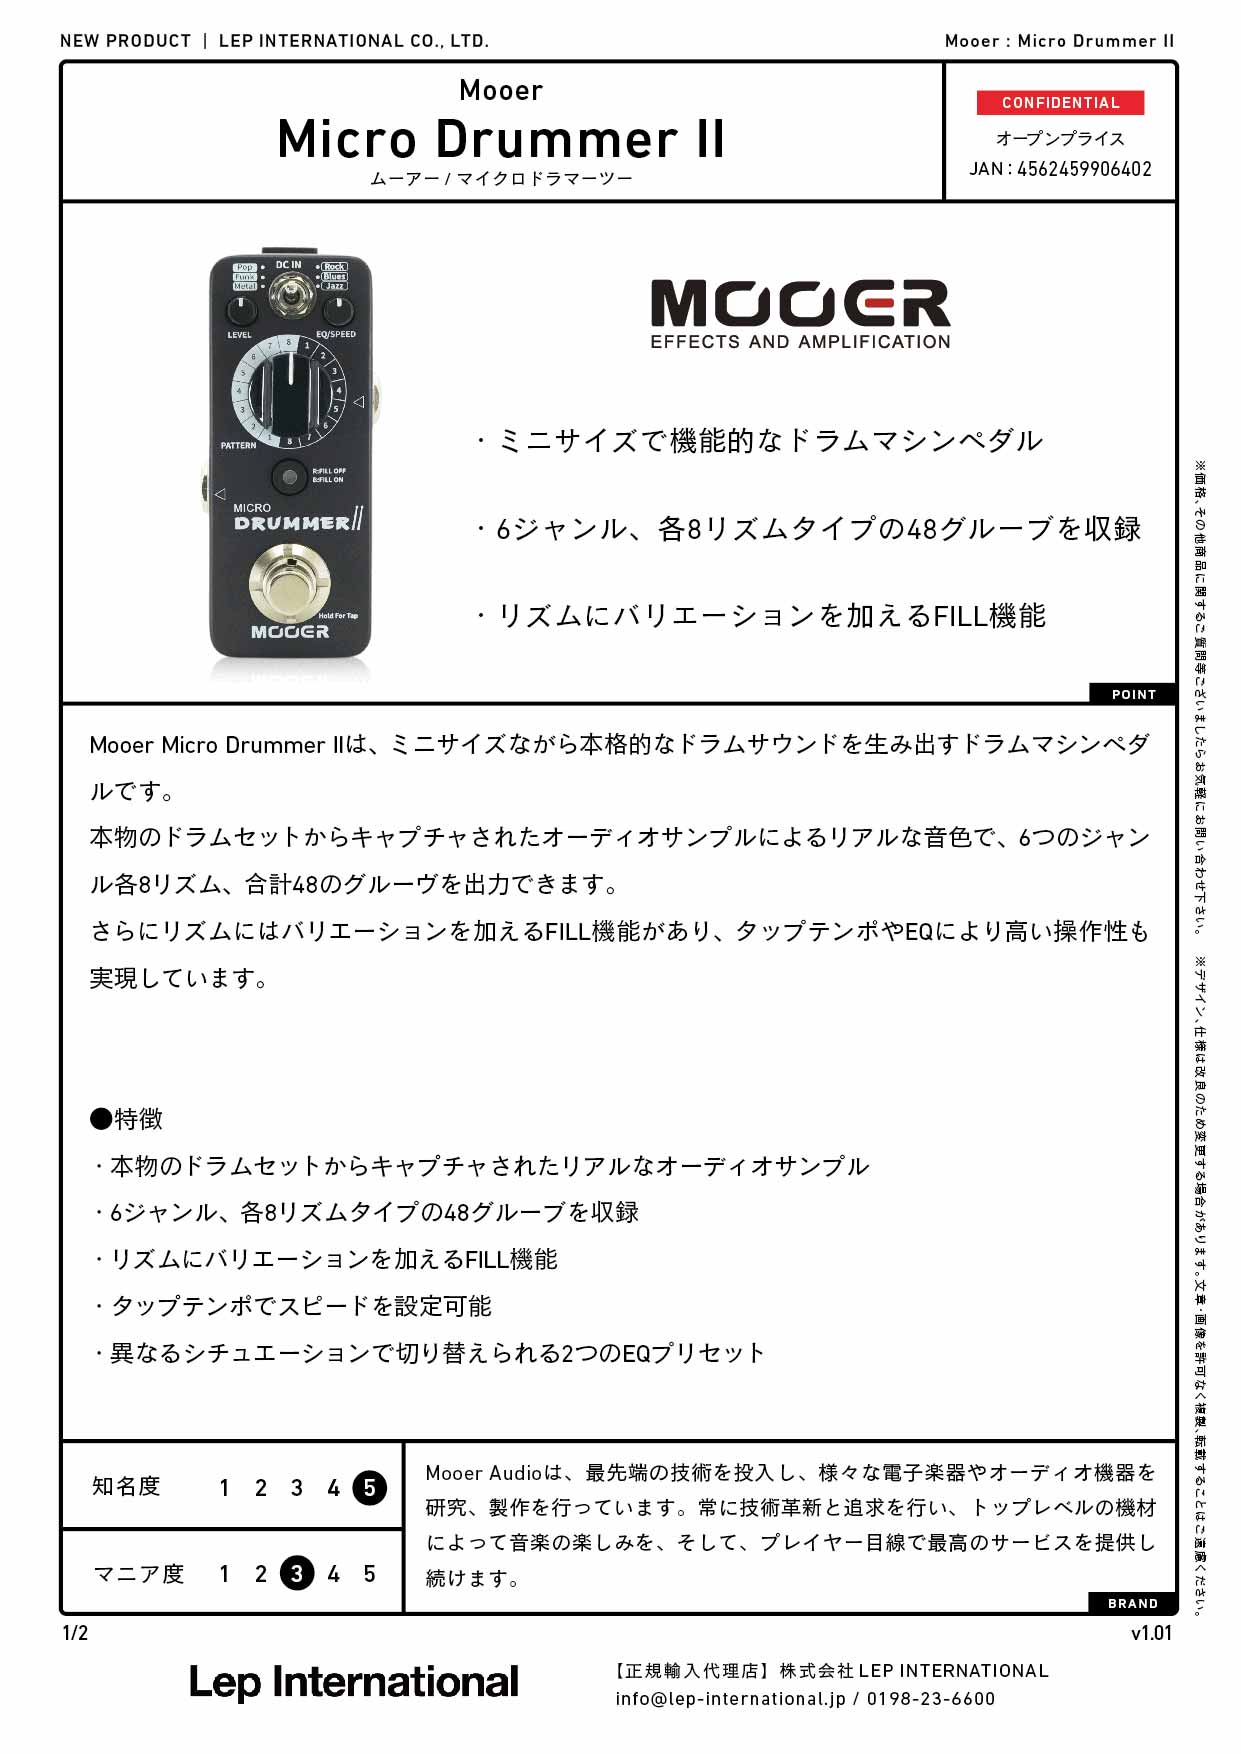 Mooer / Micro Drummer II